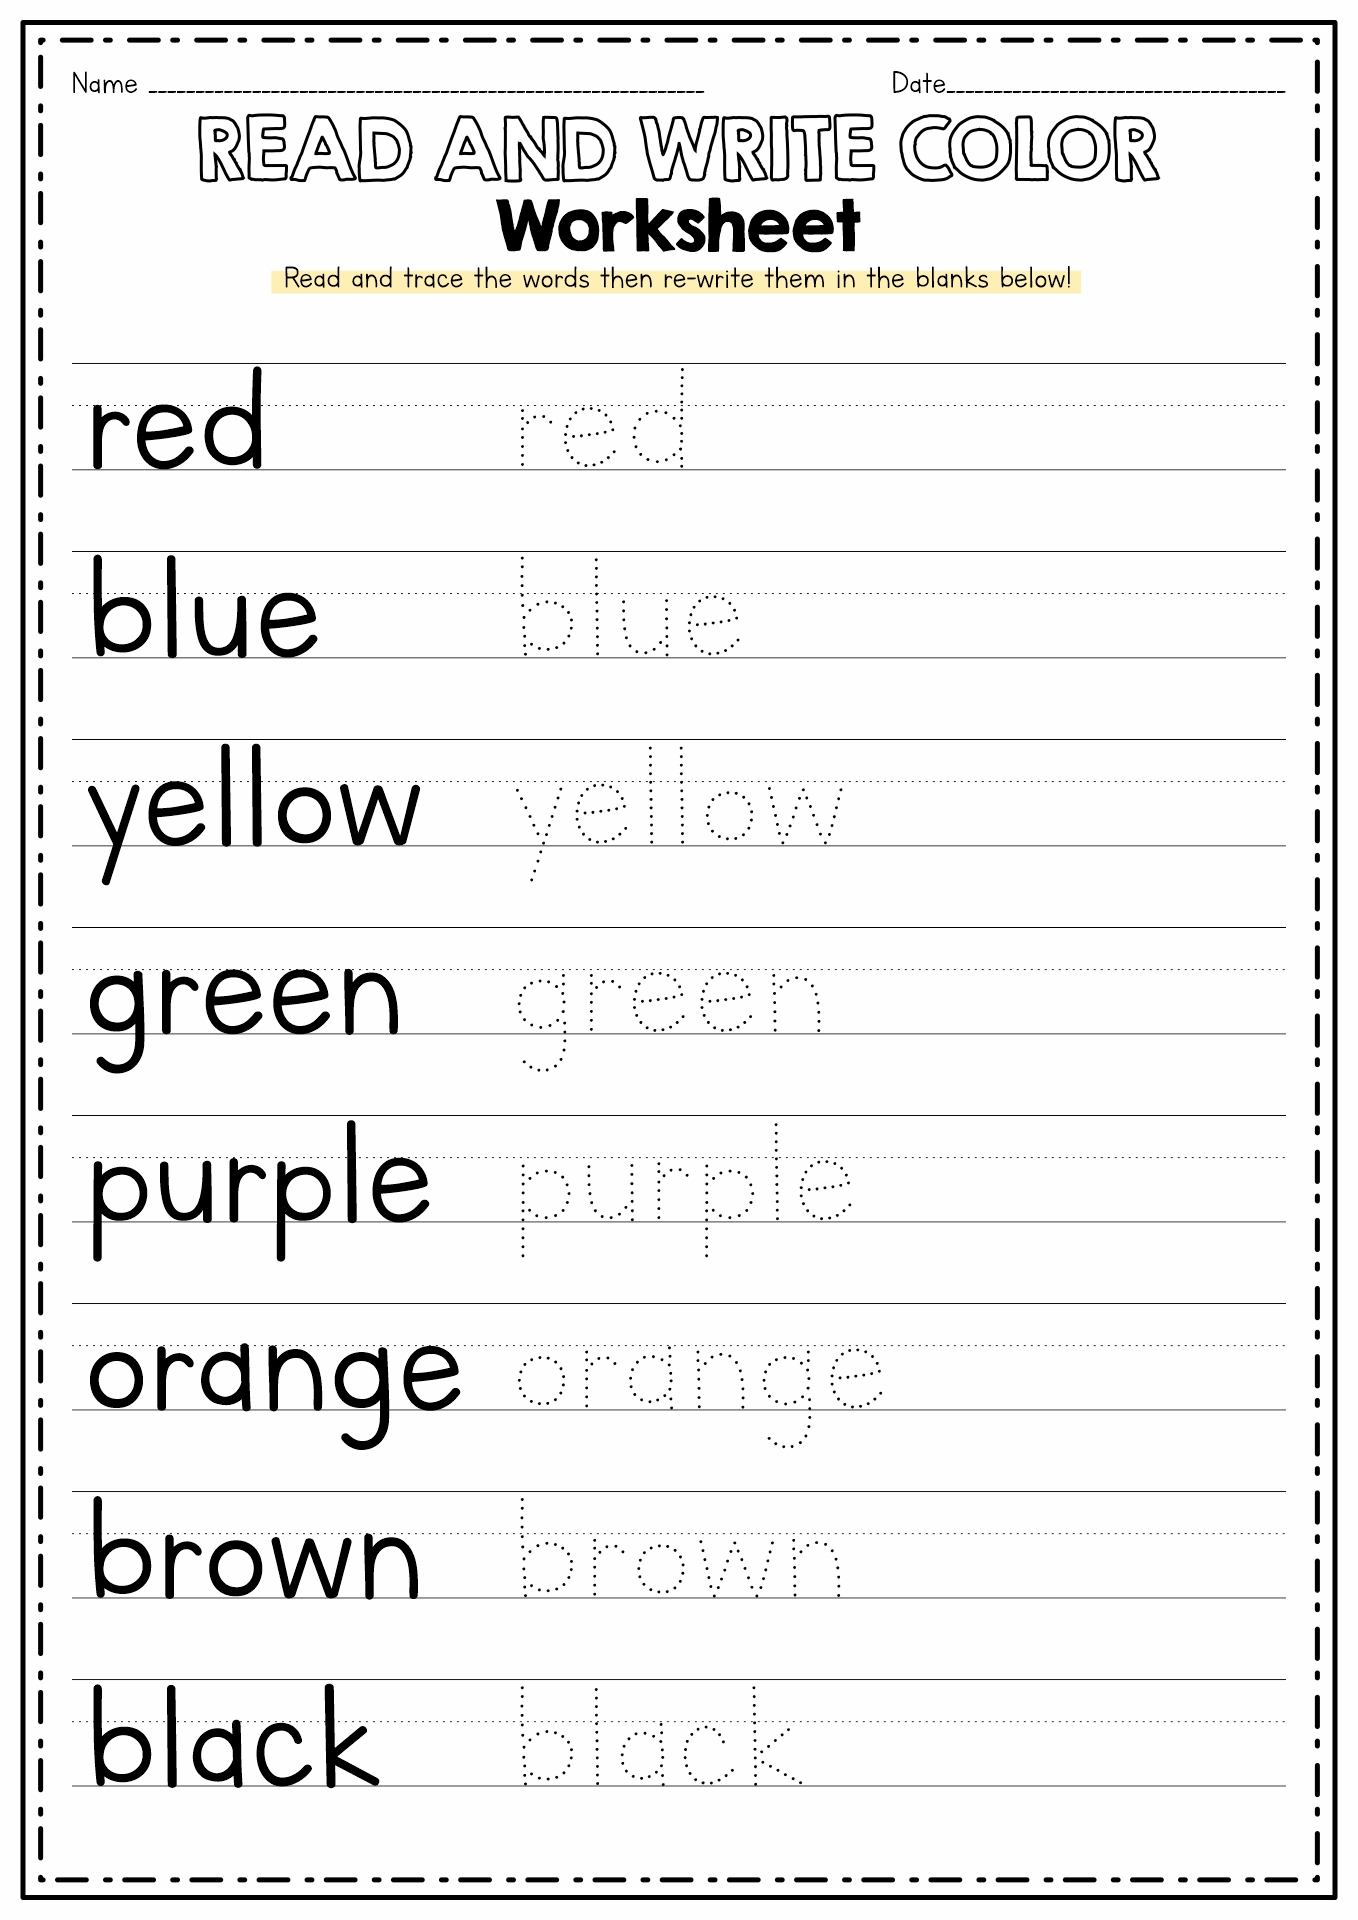 Practice Writing Color Words Worksheet